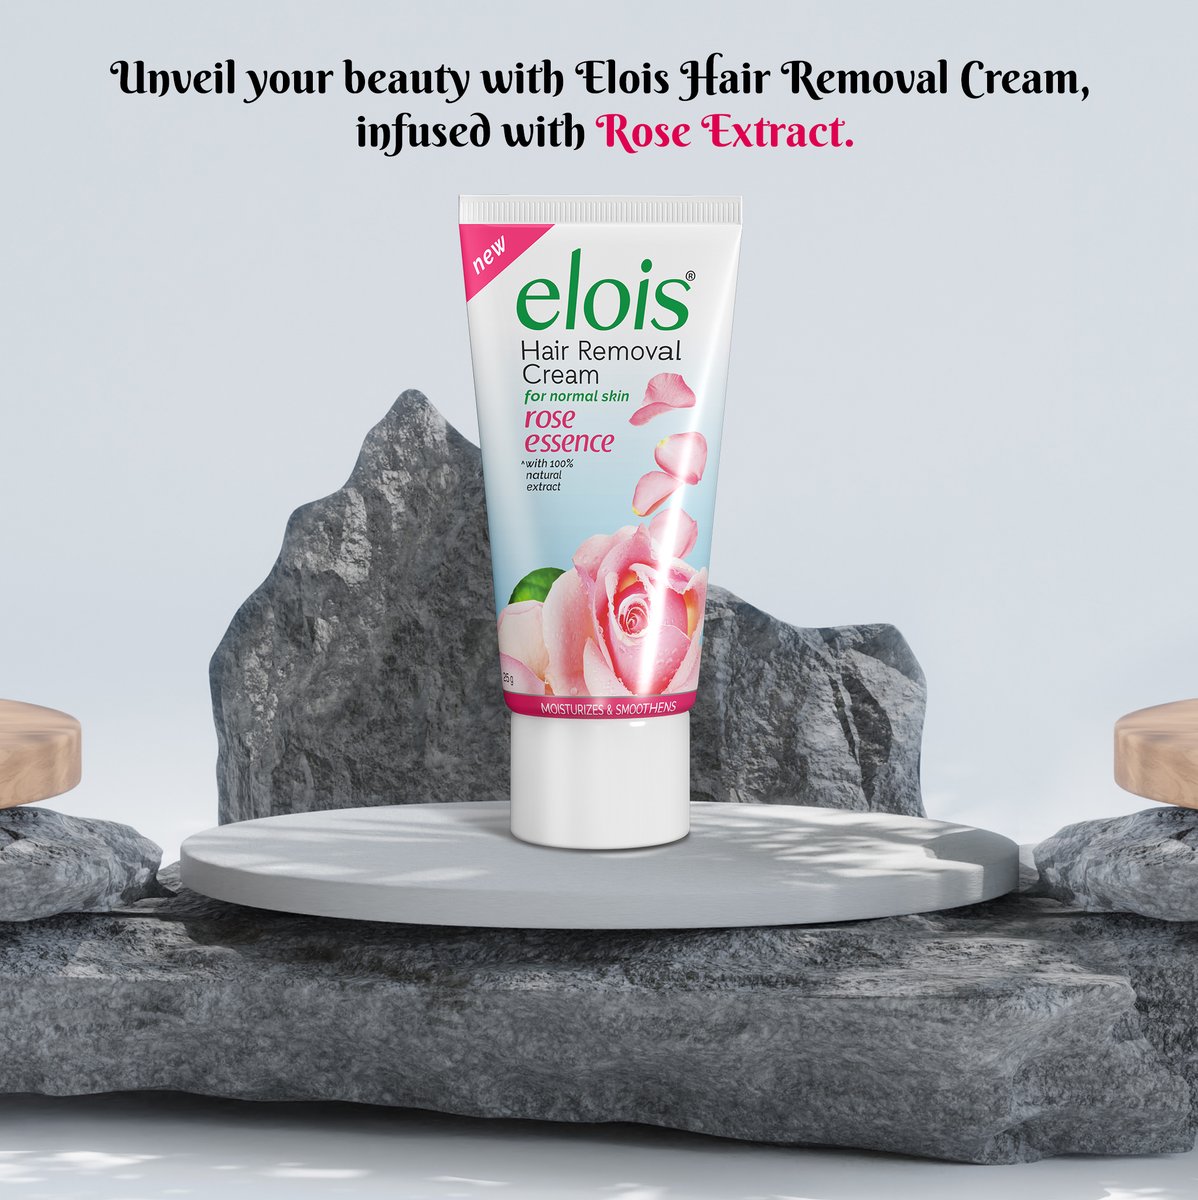 The richness of rose extract for the petal-soft natural skin with Elois Hair Removal Cream🌷

#Elois #EloisHairRemovalCream #EloisSmoothSquad #EloisBrand #FeelsLikeSkinLove #SkinBeauty #UrvashiRautela #RoseExtract #BeautifulSkin #SummerSkinCare #Velnik #VelnikIndia